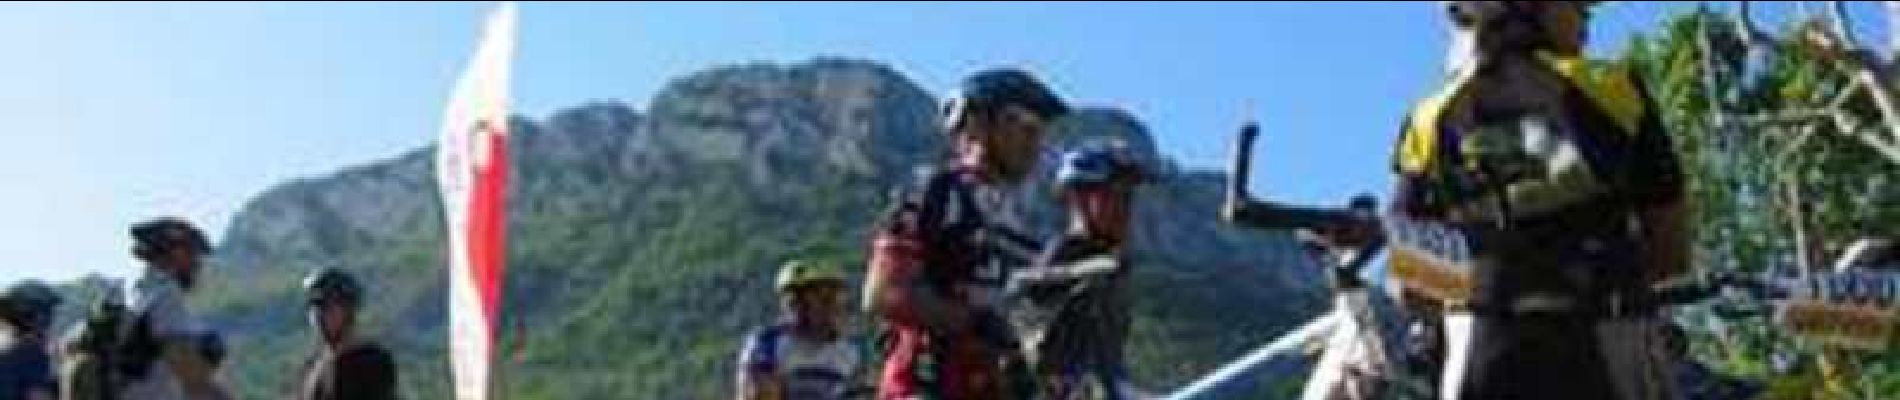 Tocht Mountainbike Buis-les-Baronnies - La Buiscyclette 2003 - 77km - Photo